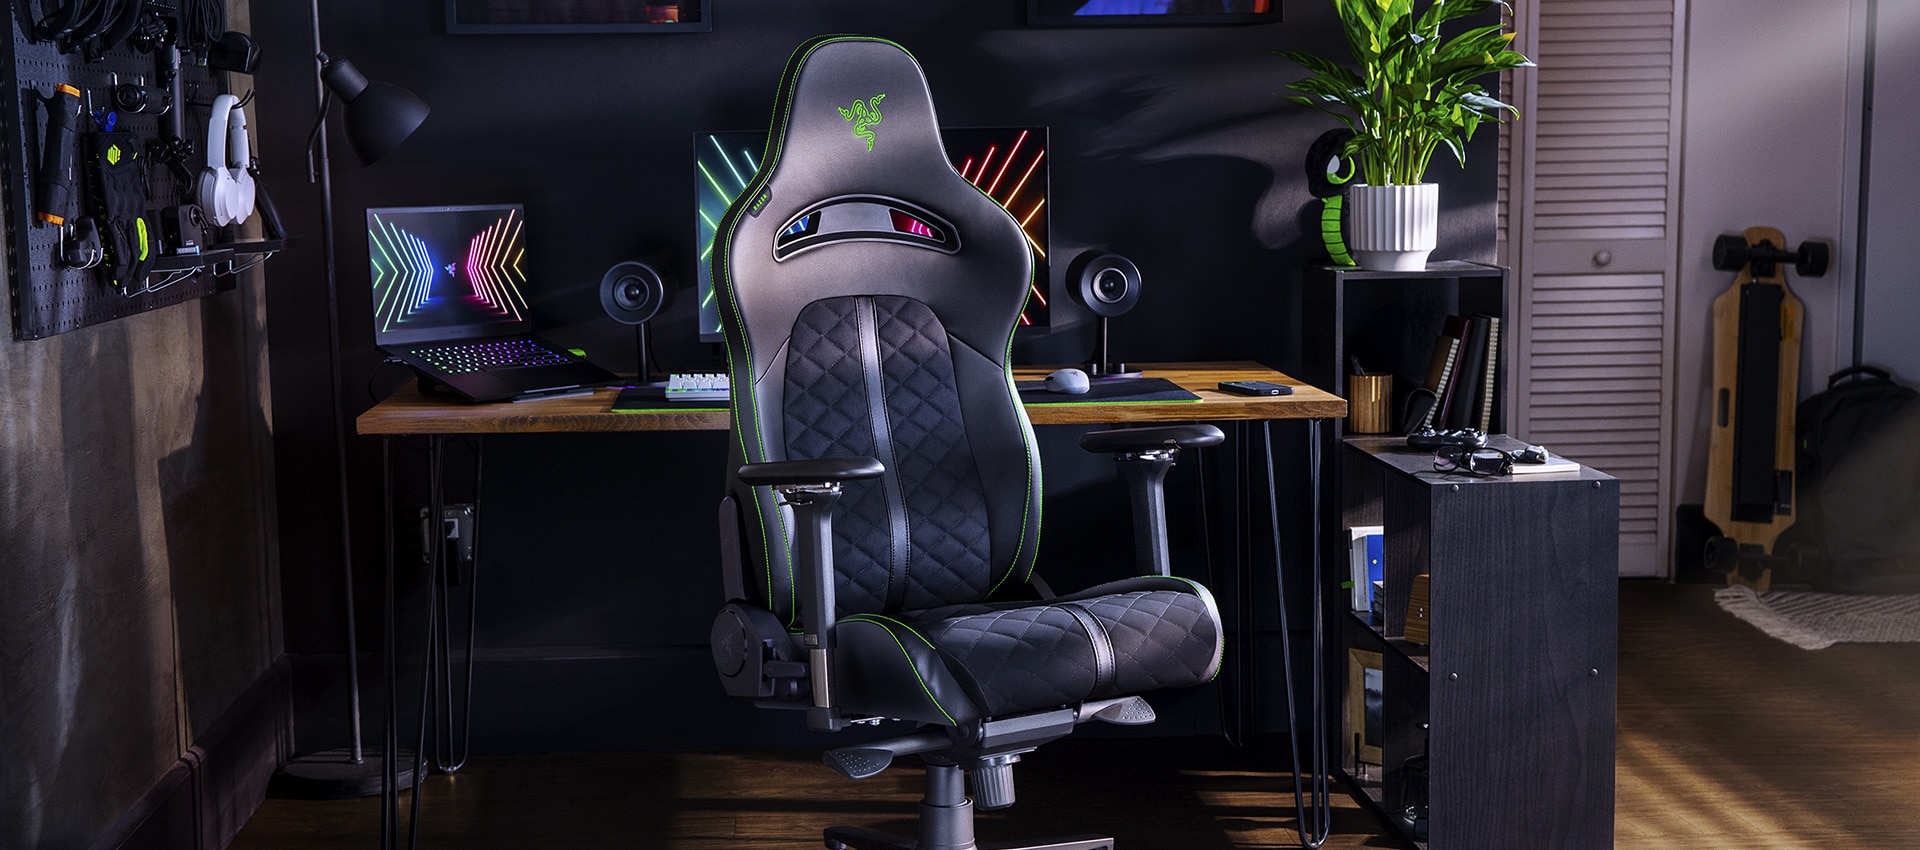 Introducing the new Razer Enki gaming chair -